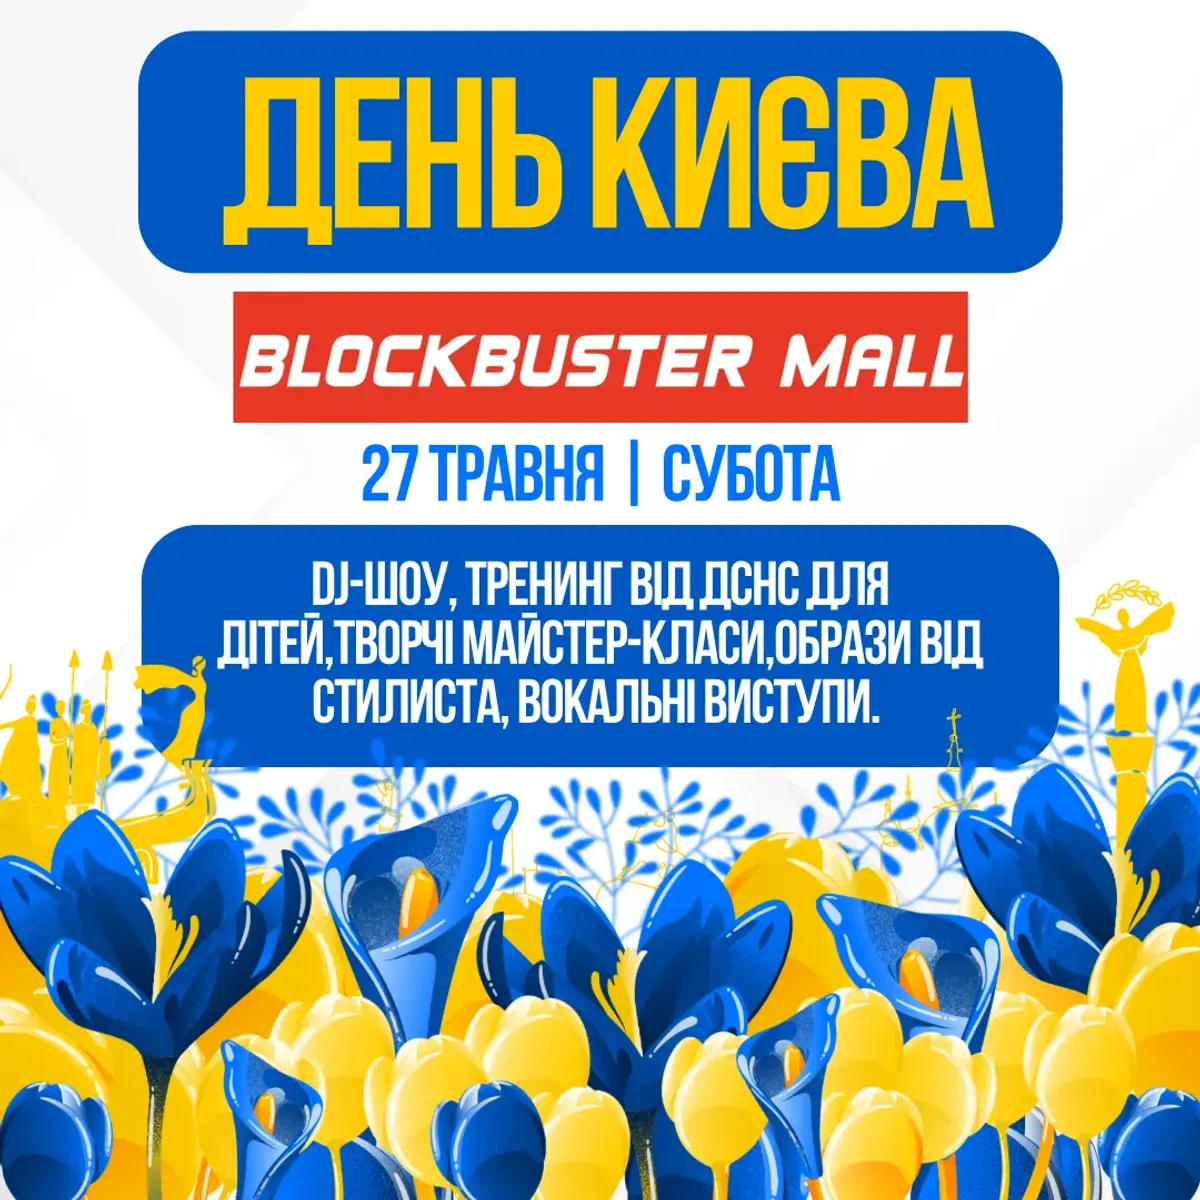 Kyiv Day celebration in BLOCKBUSTER MALL